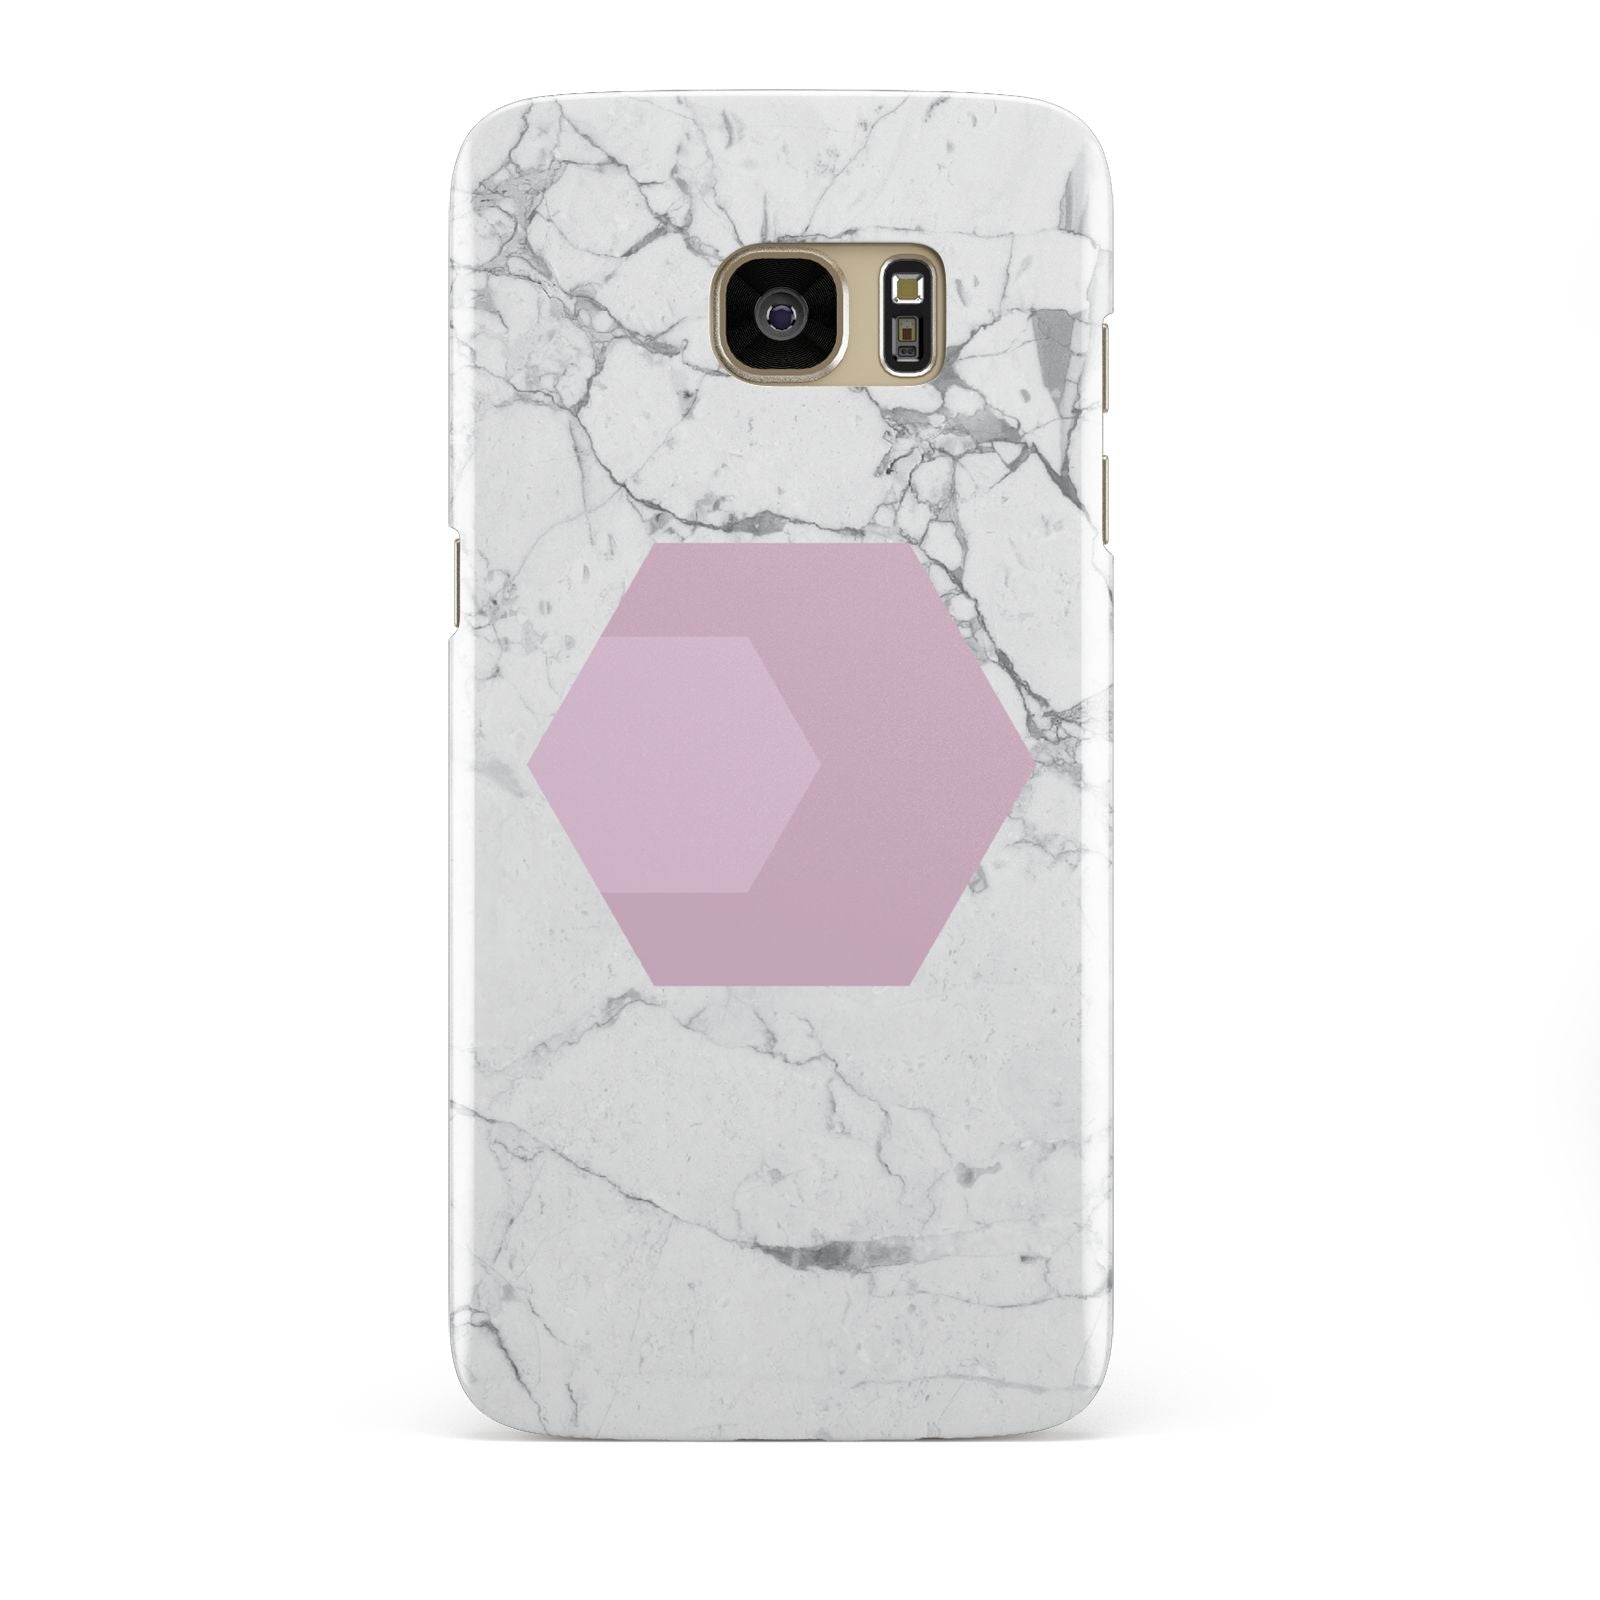 Marble White Grey Carrara Samsung Galaxy S7 Edge Case